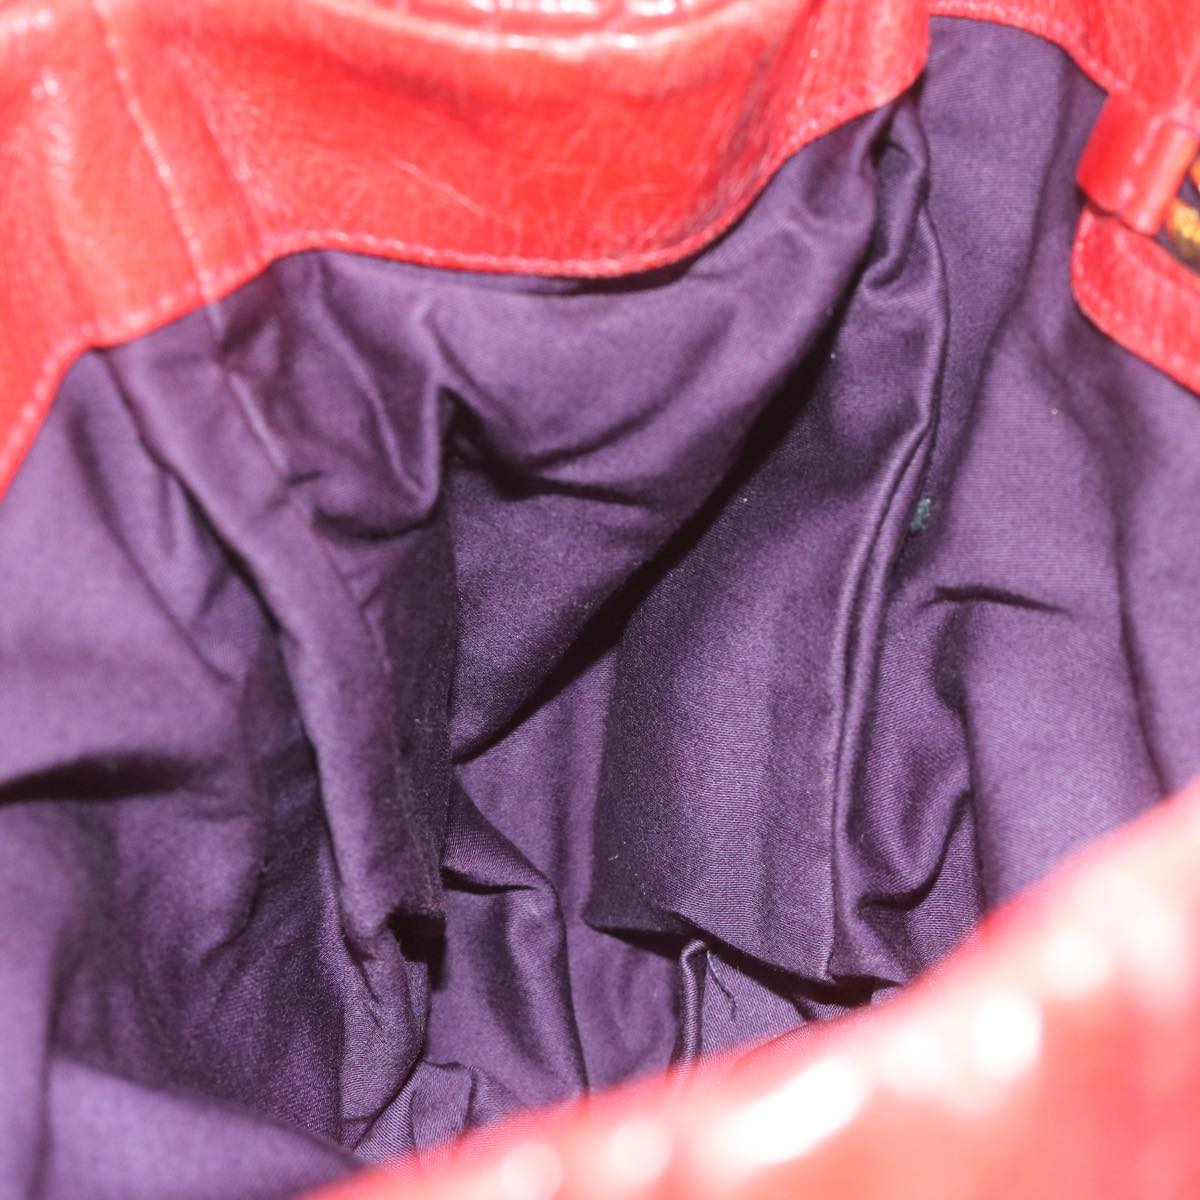 Miu Miu Materasse Hand Bag Leather Red Auth bs10276